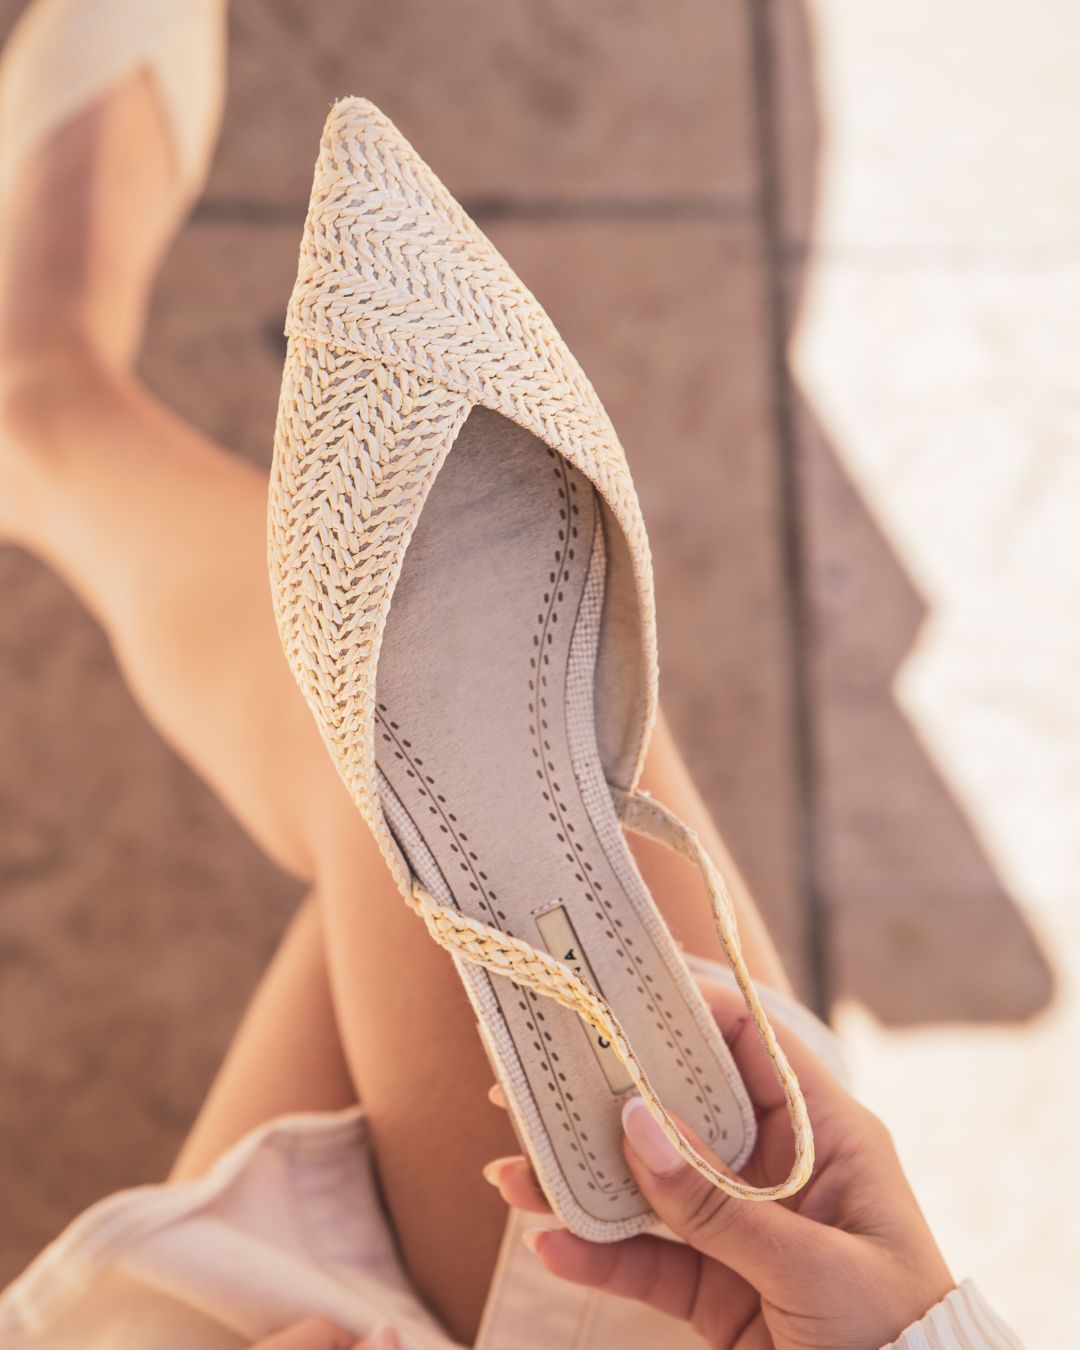 Sandale femme plate escarpin beige - Isabella